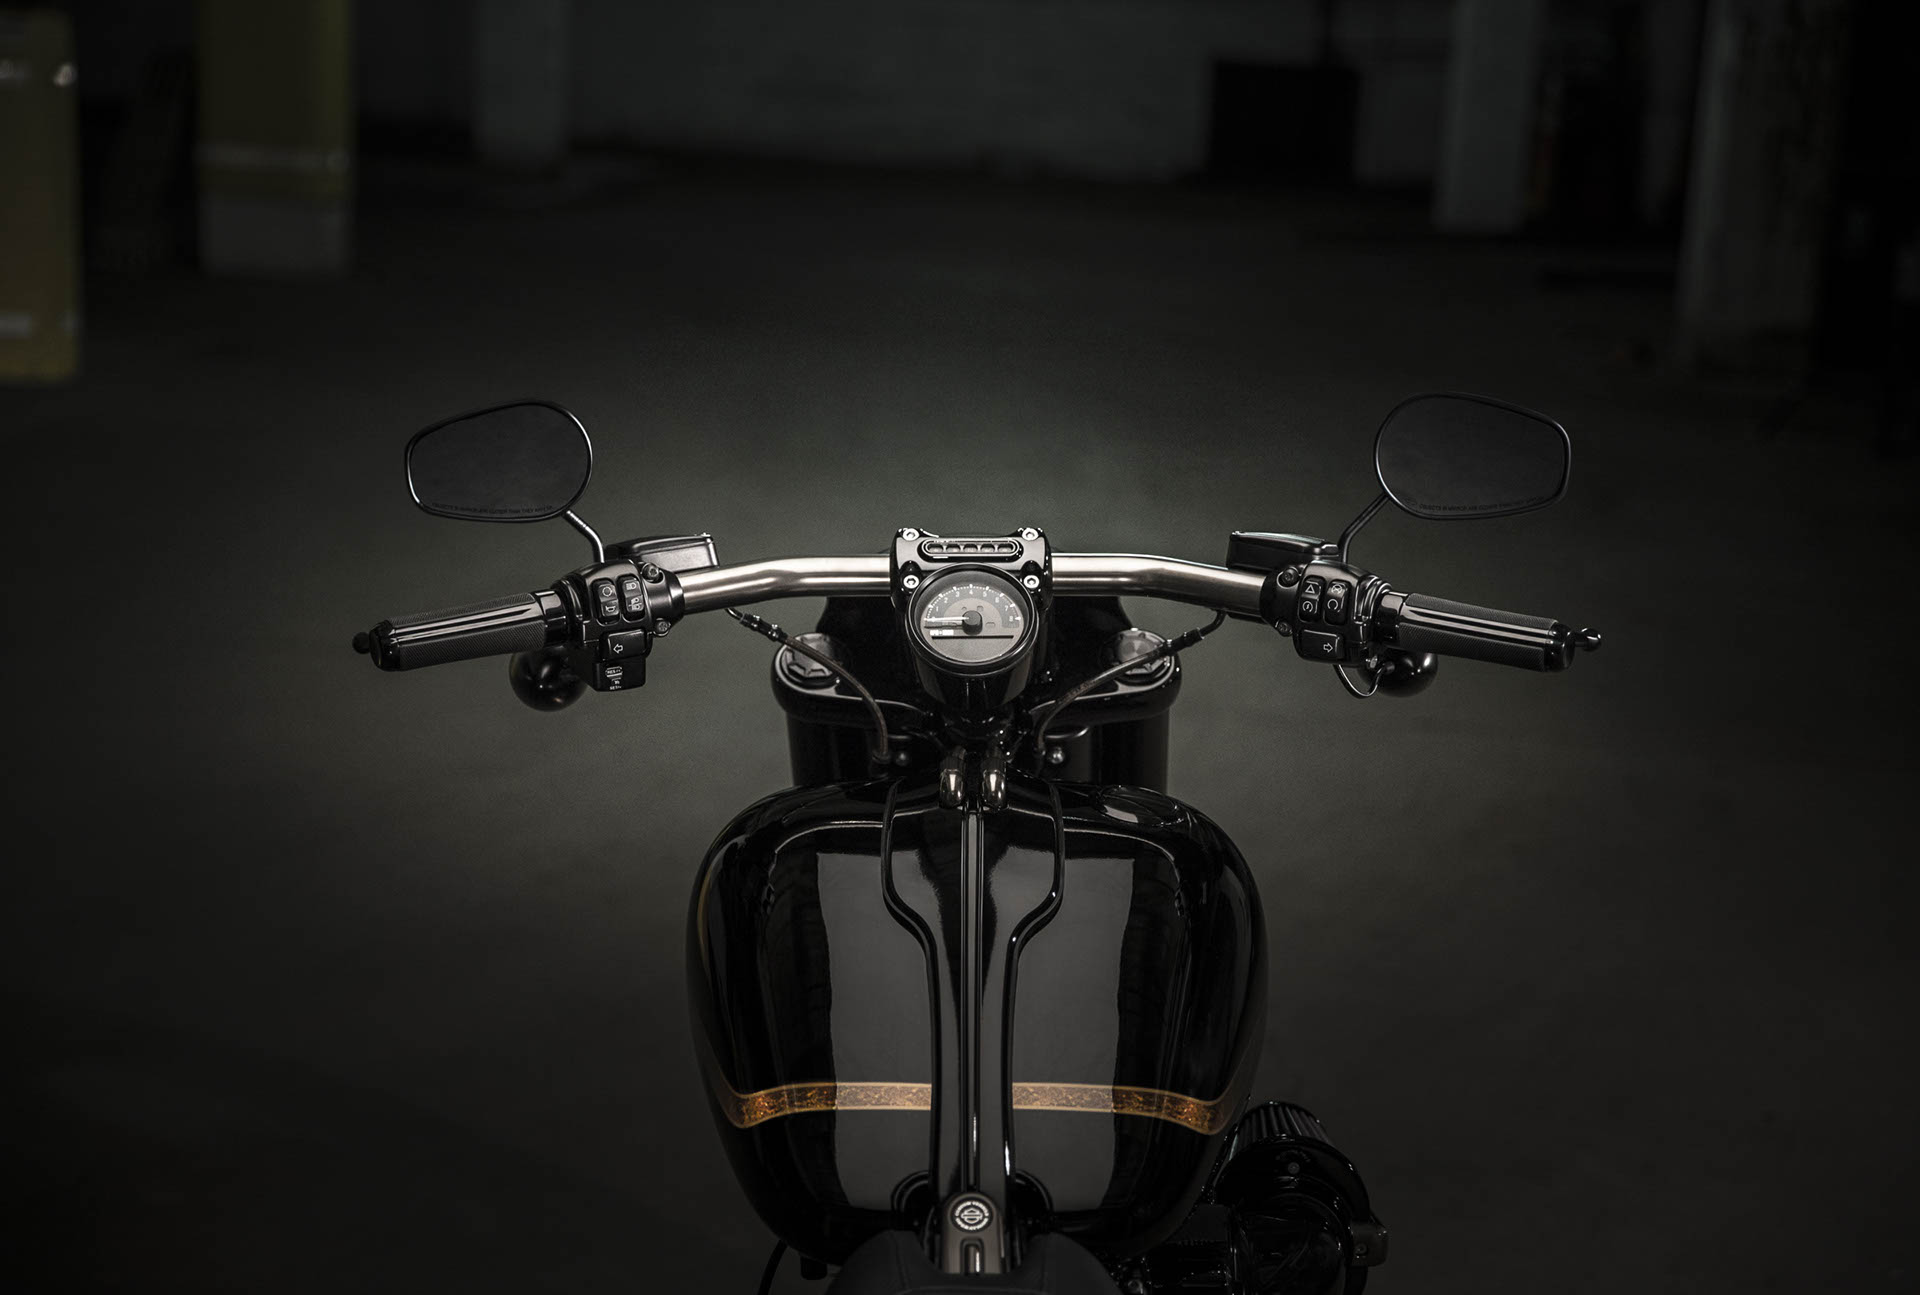 Harley-Davidson CVO Pro Street Breakout 2016